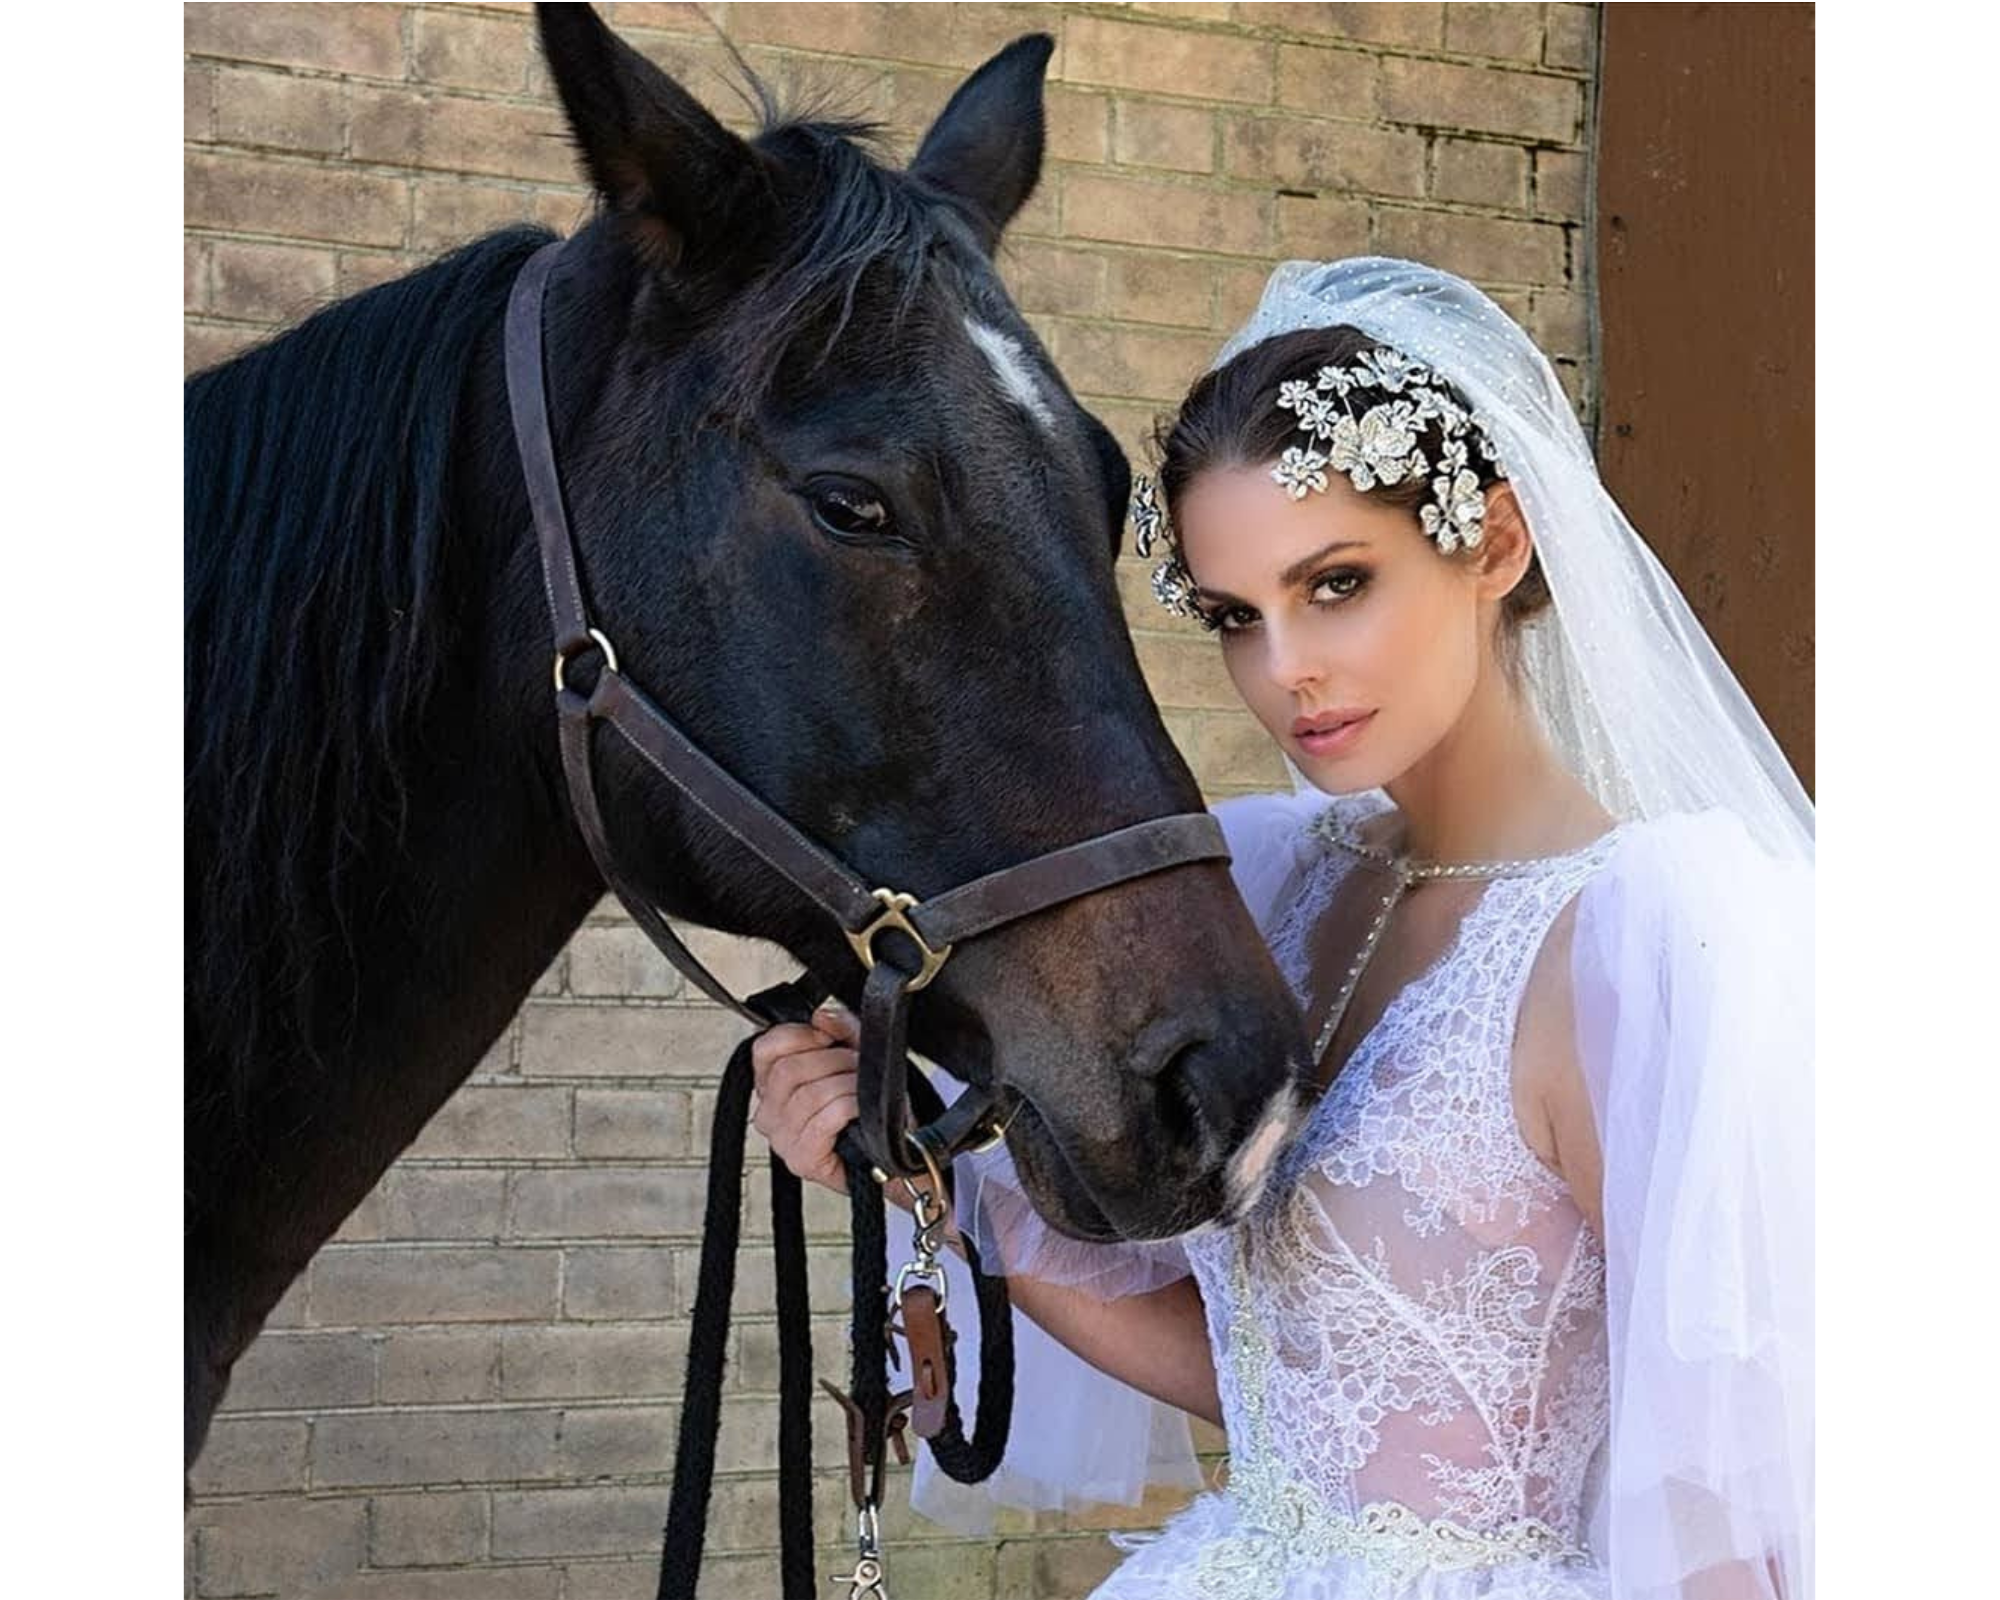 A stunning bride wearing a veil and Swarovski crystal headpiece beside her dark bay horse.